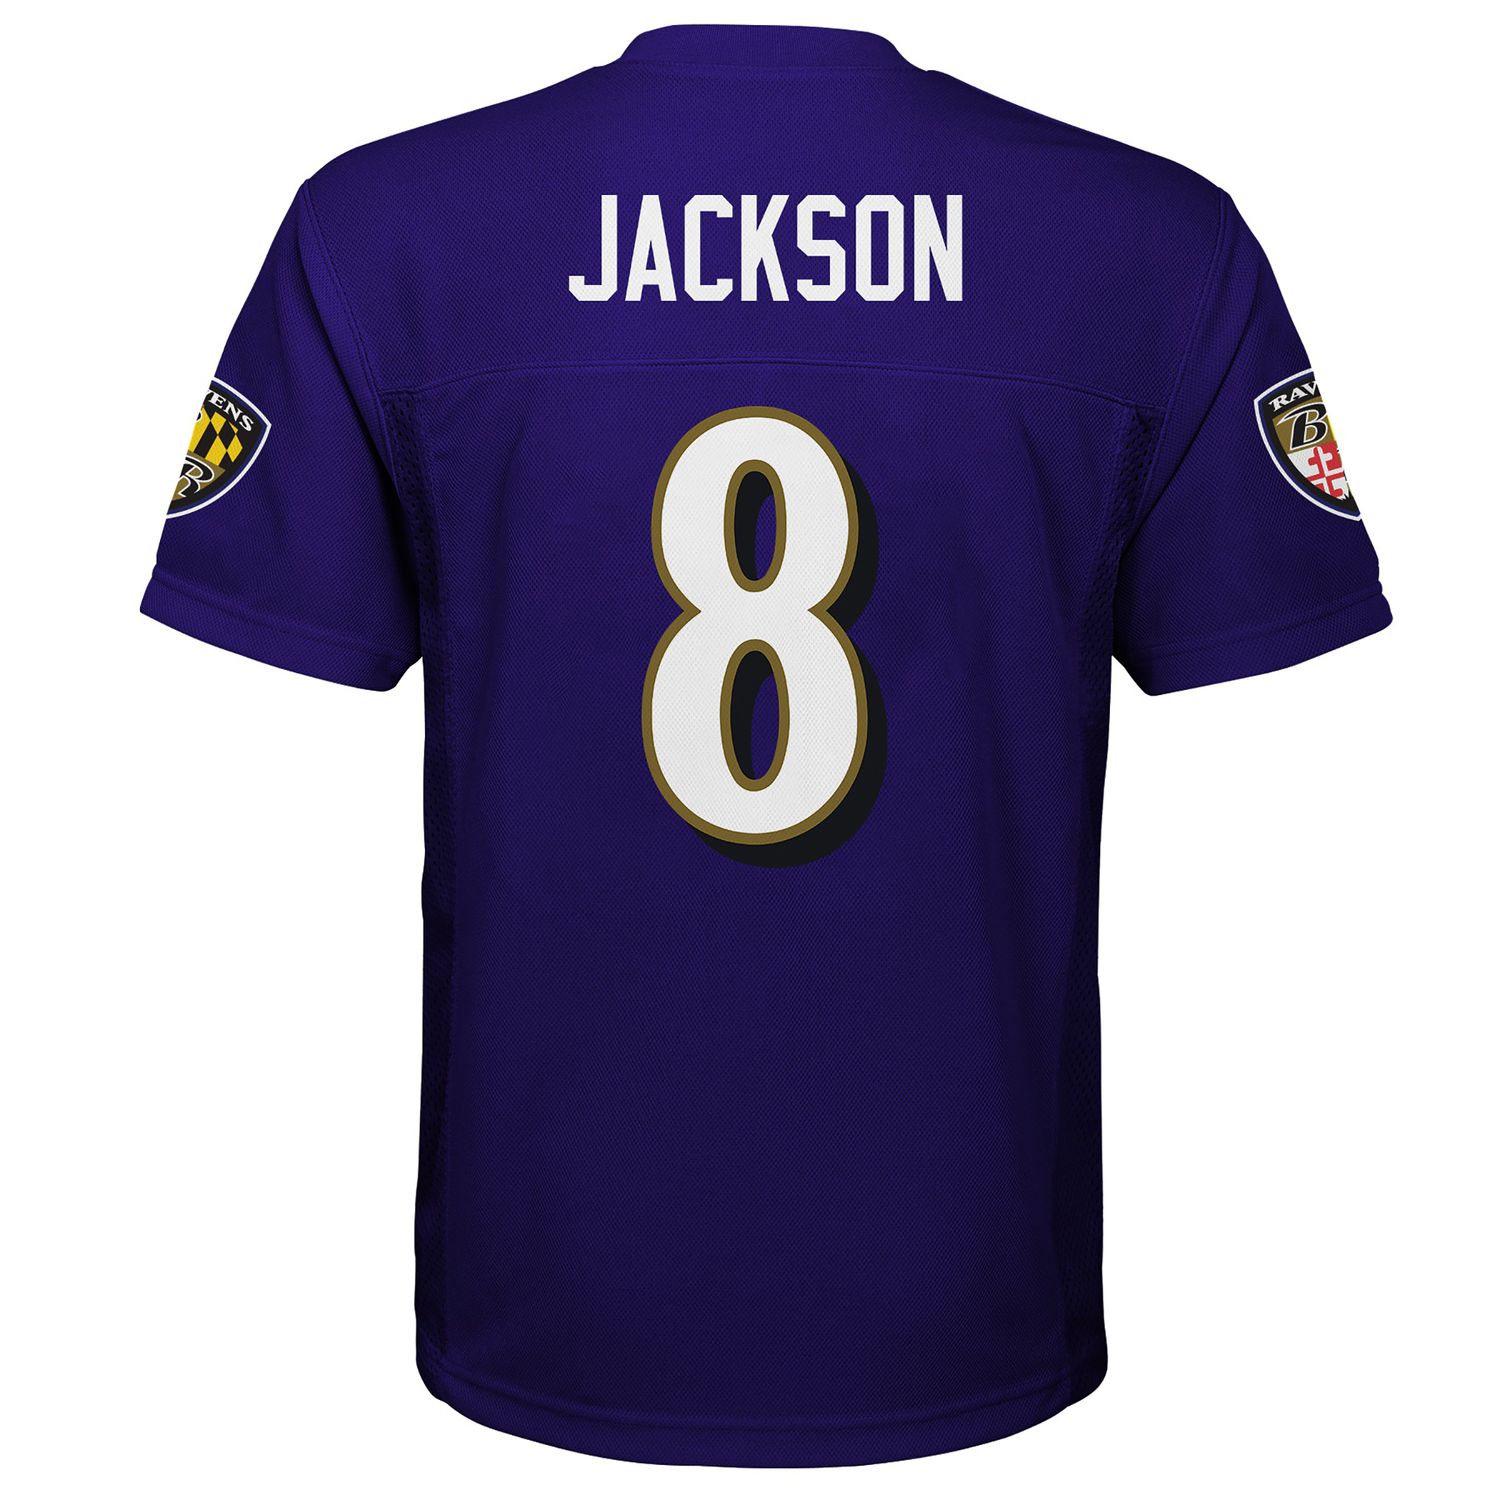 jackson 8 jersey